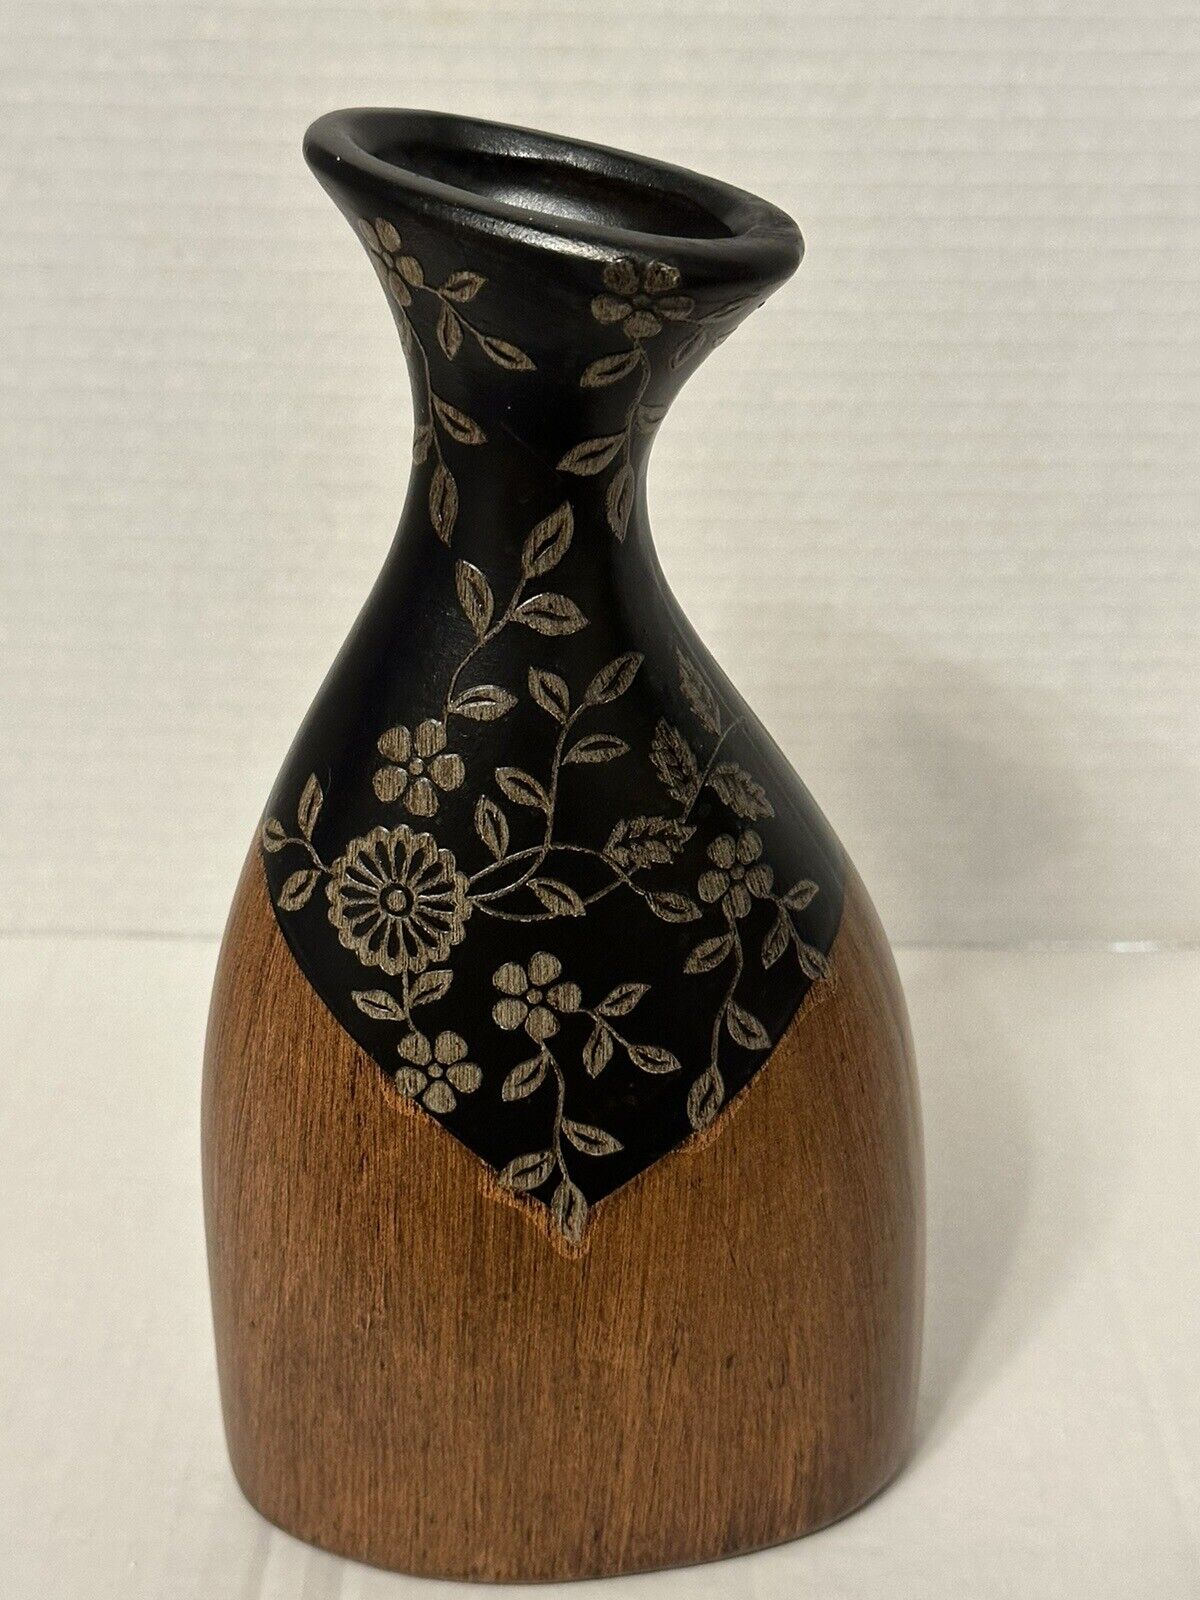 Heritage Mint Faux Wood Ceramic Bud Vase Floral Etch Brown Black Art Deco 2009